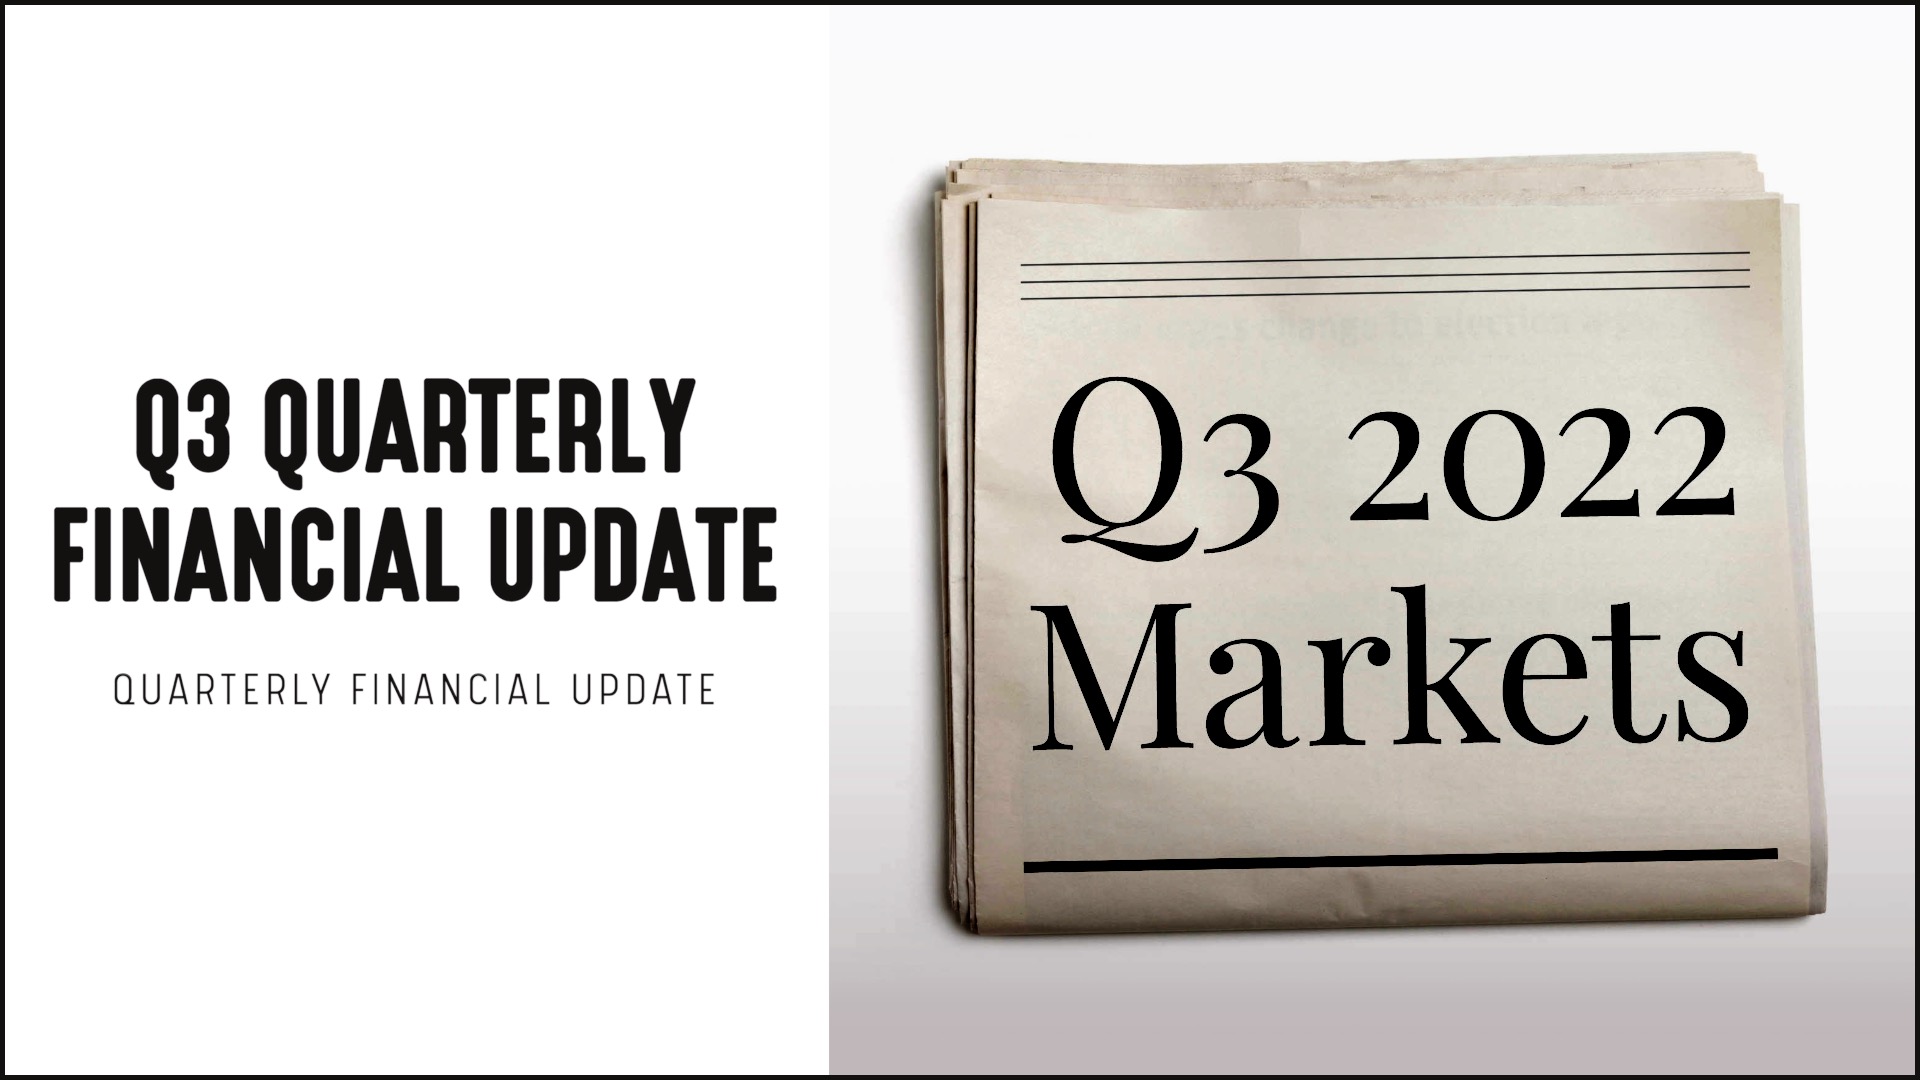 [NEW] Market Update Campaign | Q3 2022 Financial Update